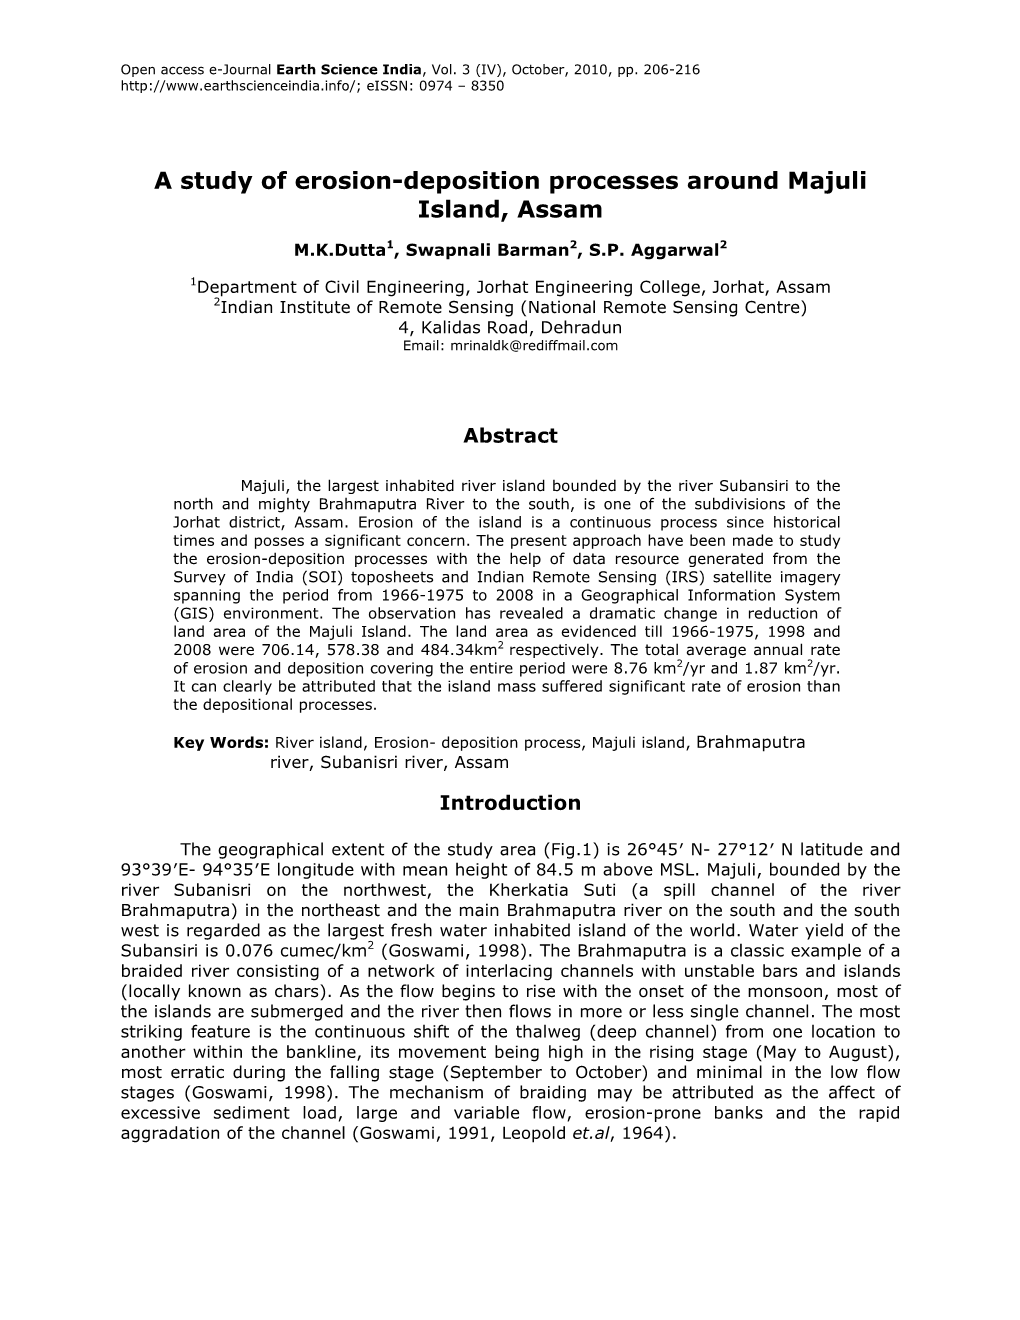 A Study of Erosion-Deposition Processes Around Majuli Island, Assam